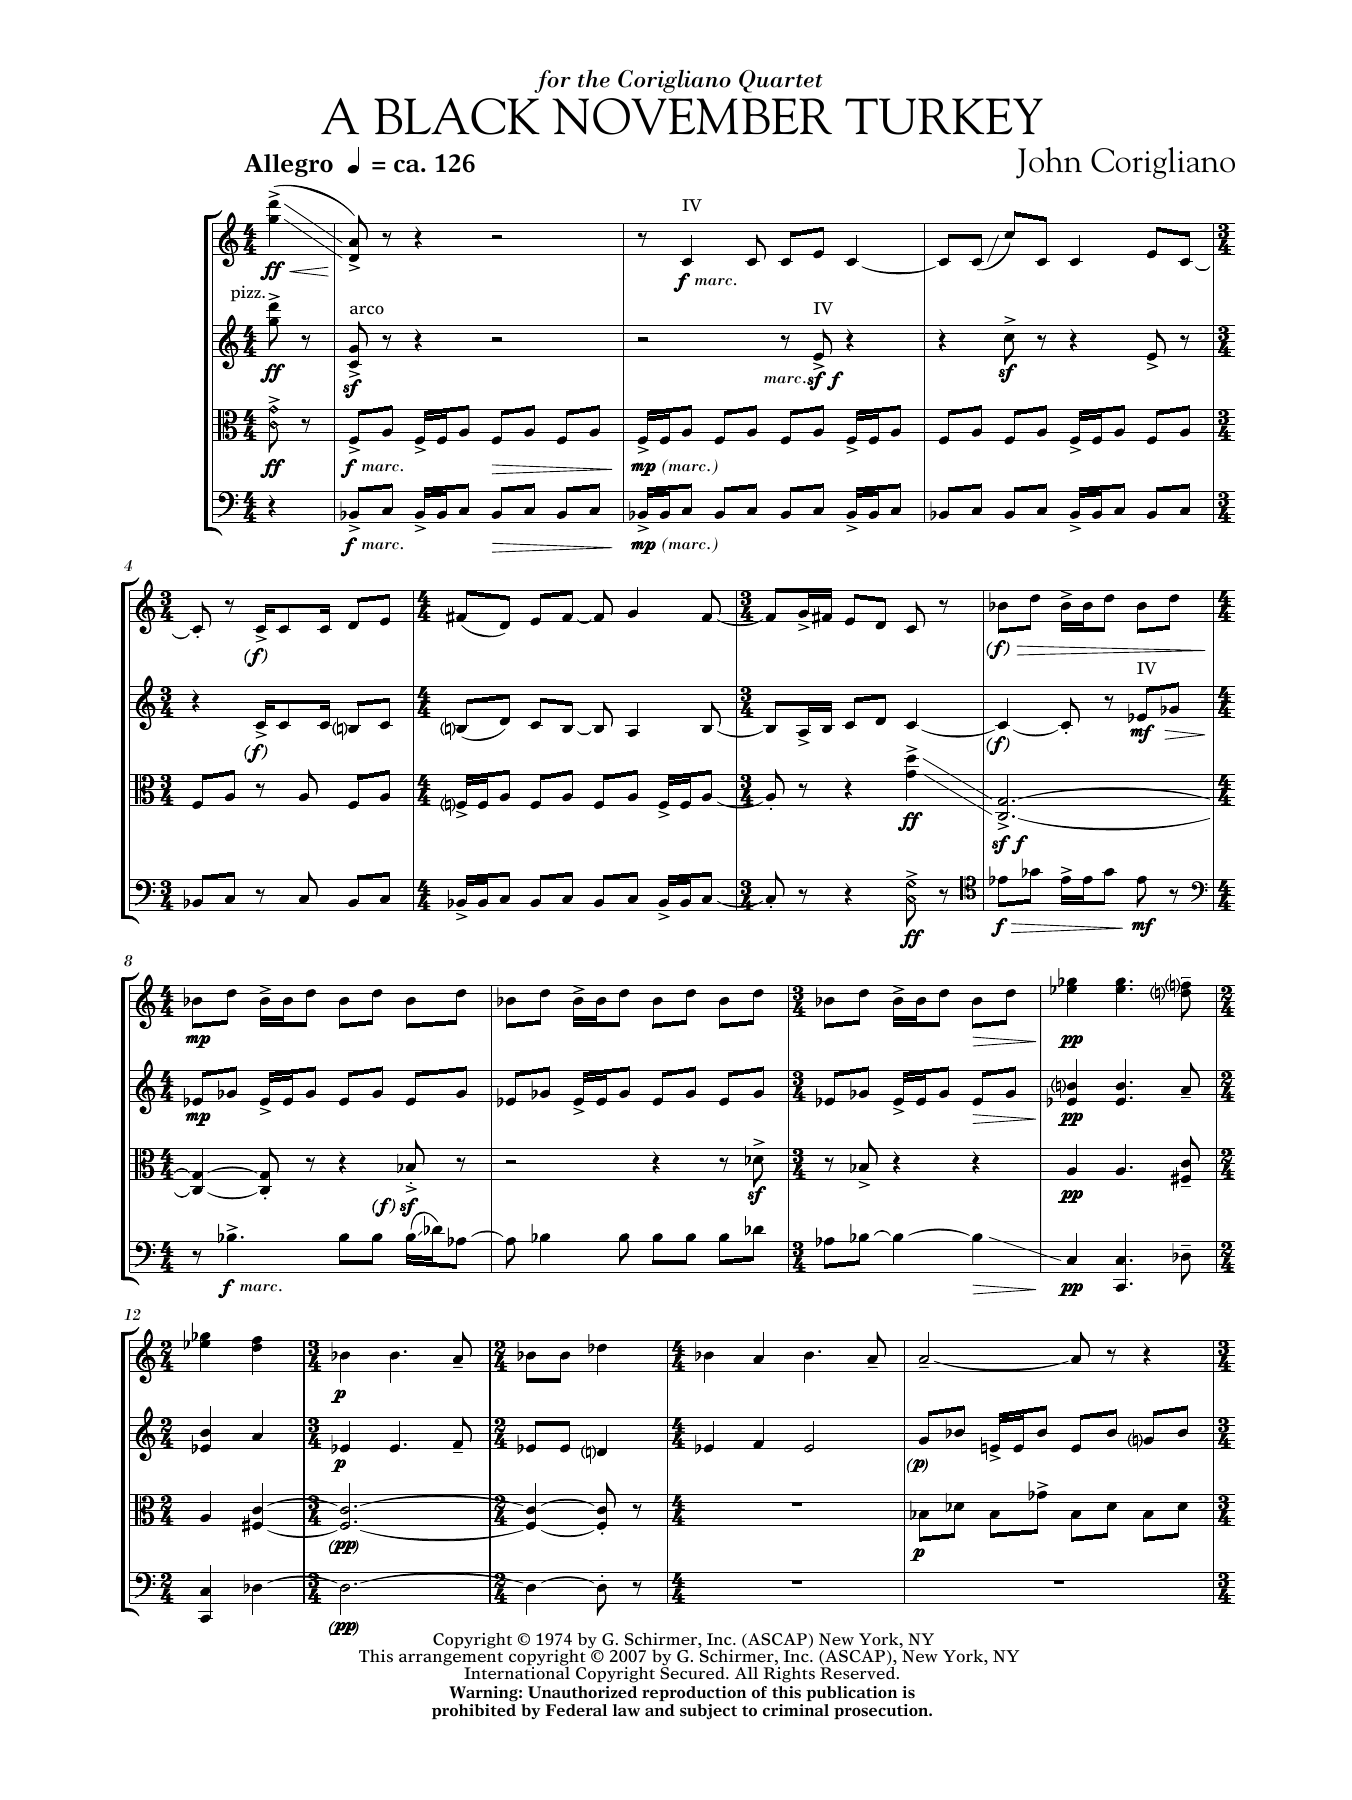 John Corigliano Black November Turkey Sheet Music Notes & Chords for Chamber Group - Download or Print PDF